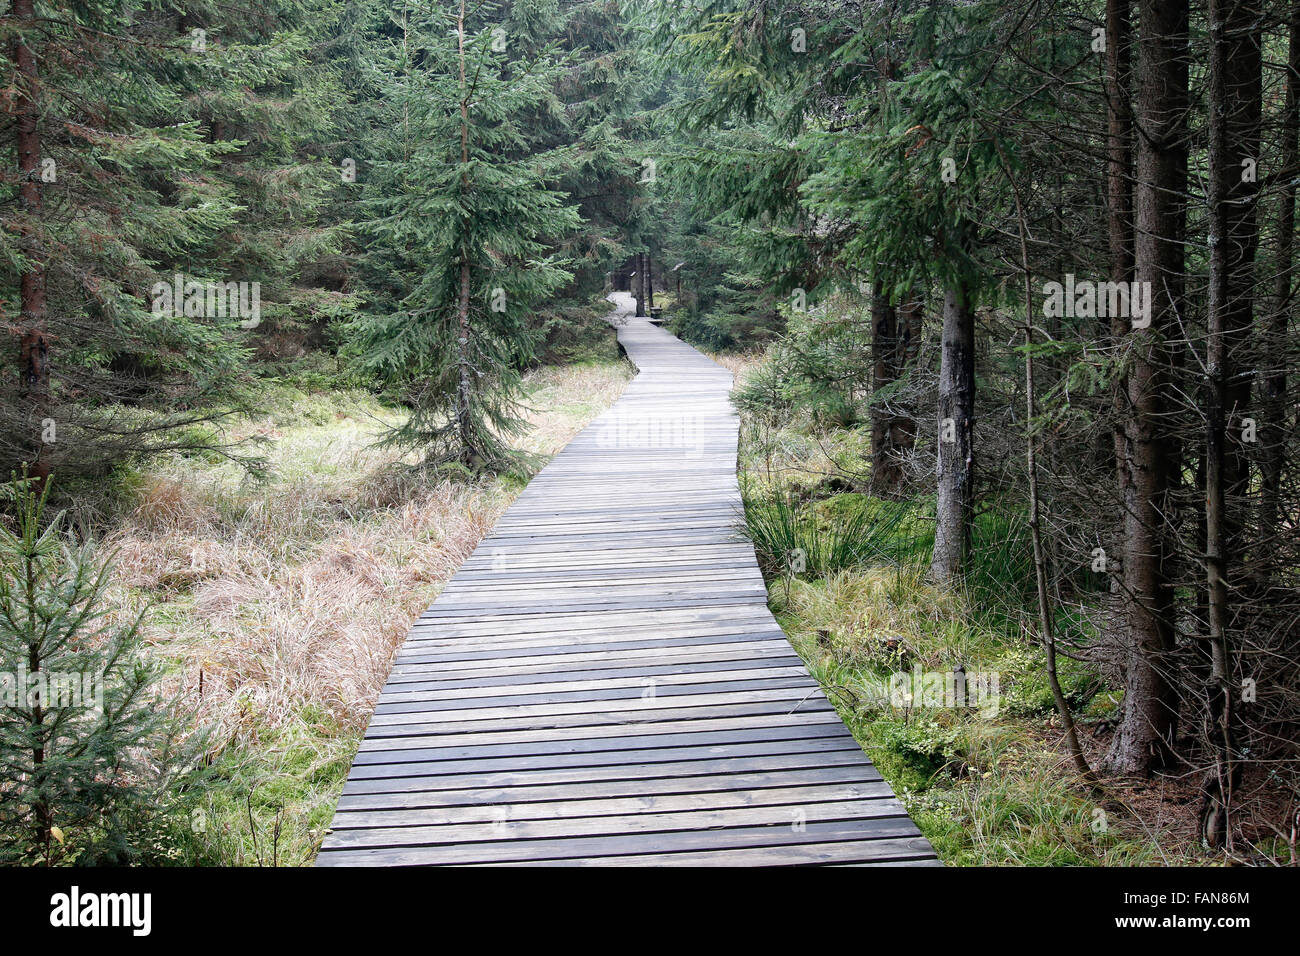 The nature trail in a nature reserve Kladska Stock Photo